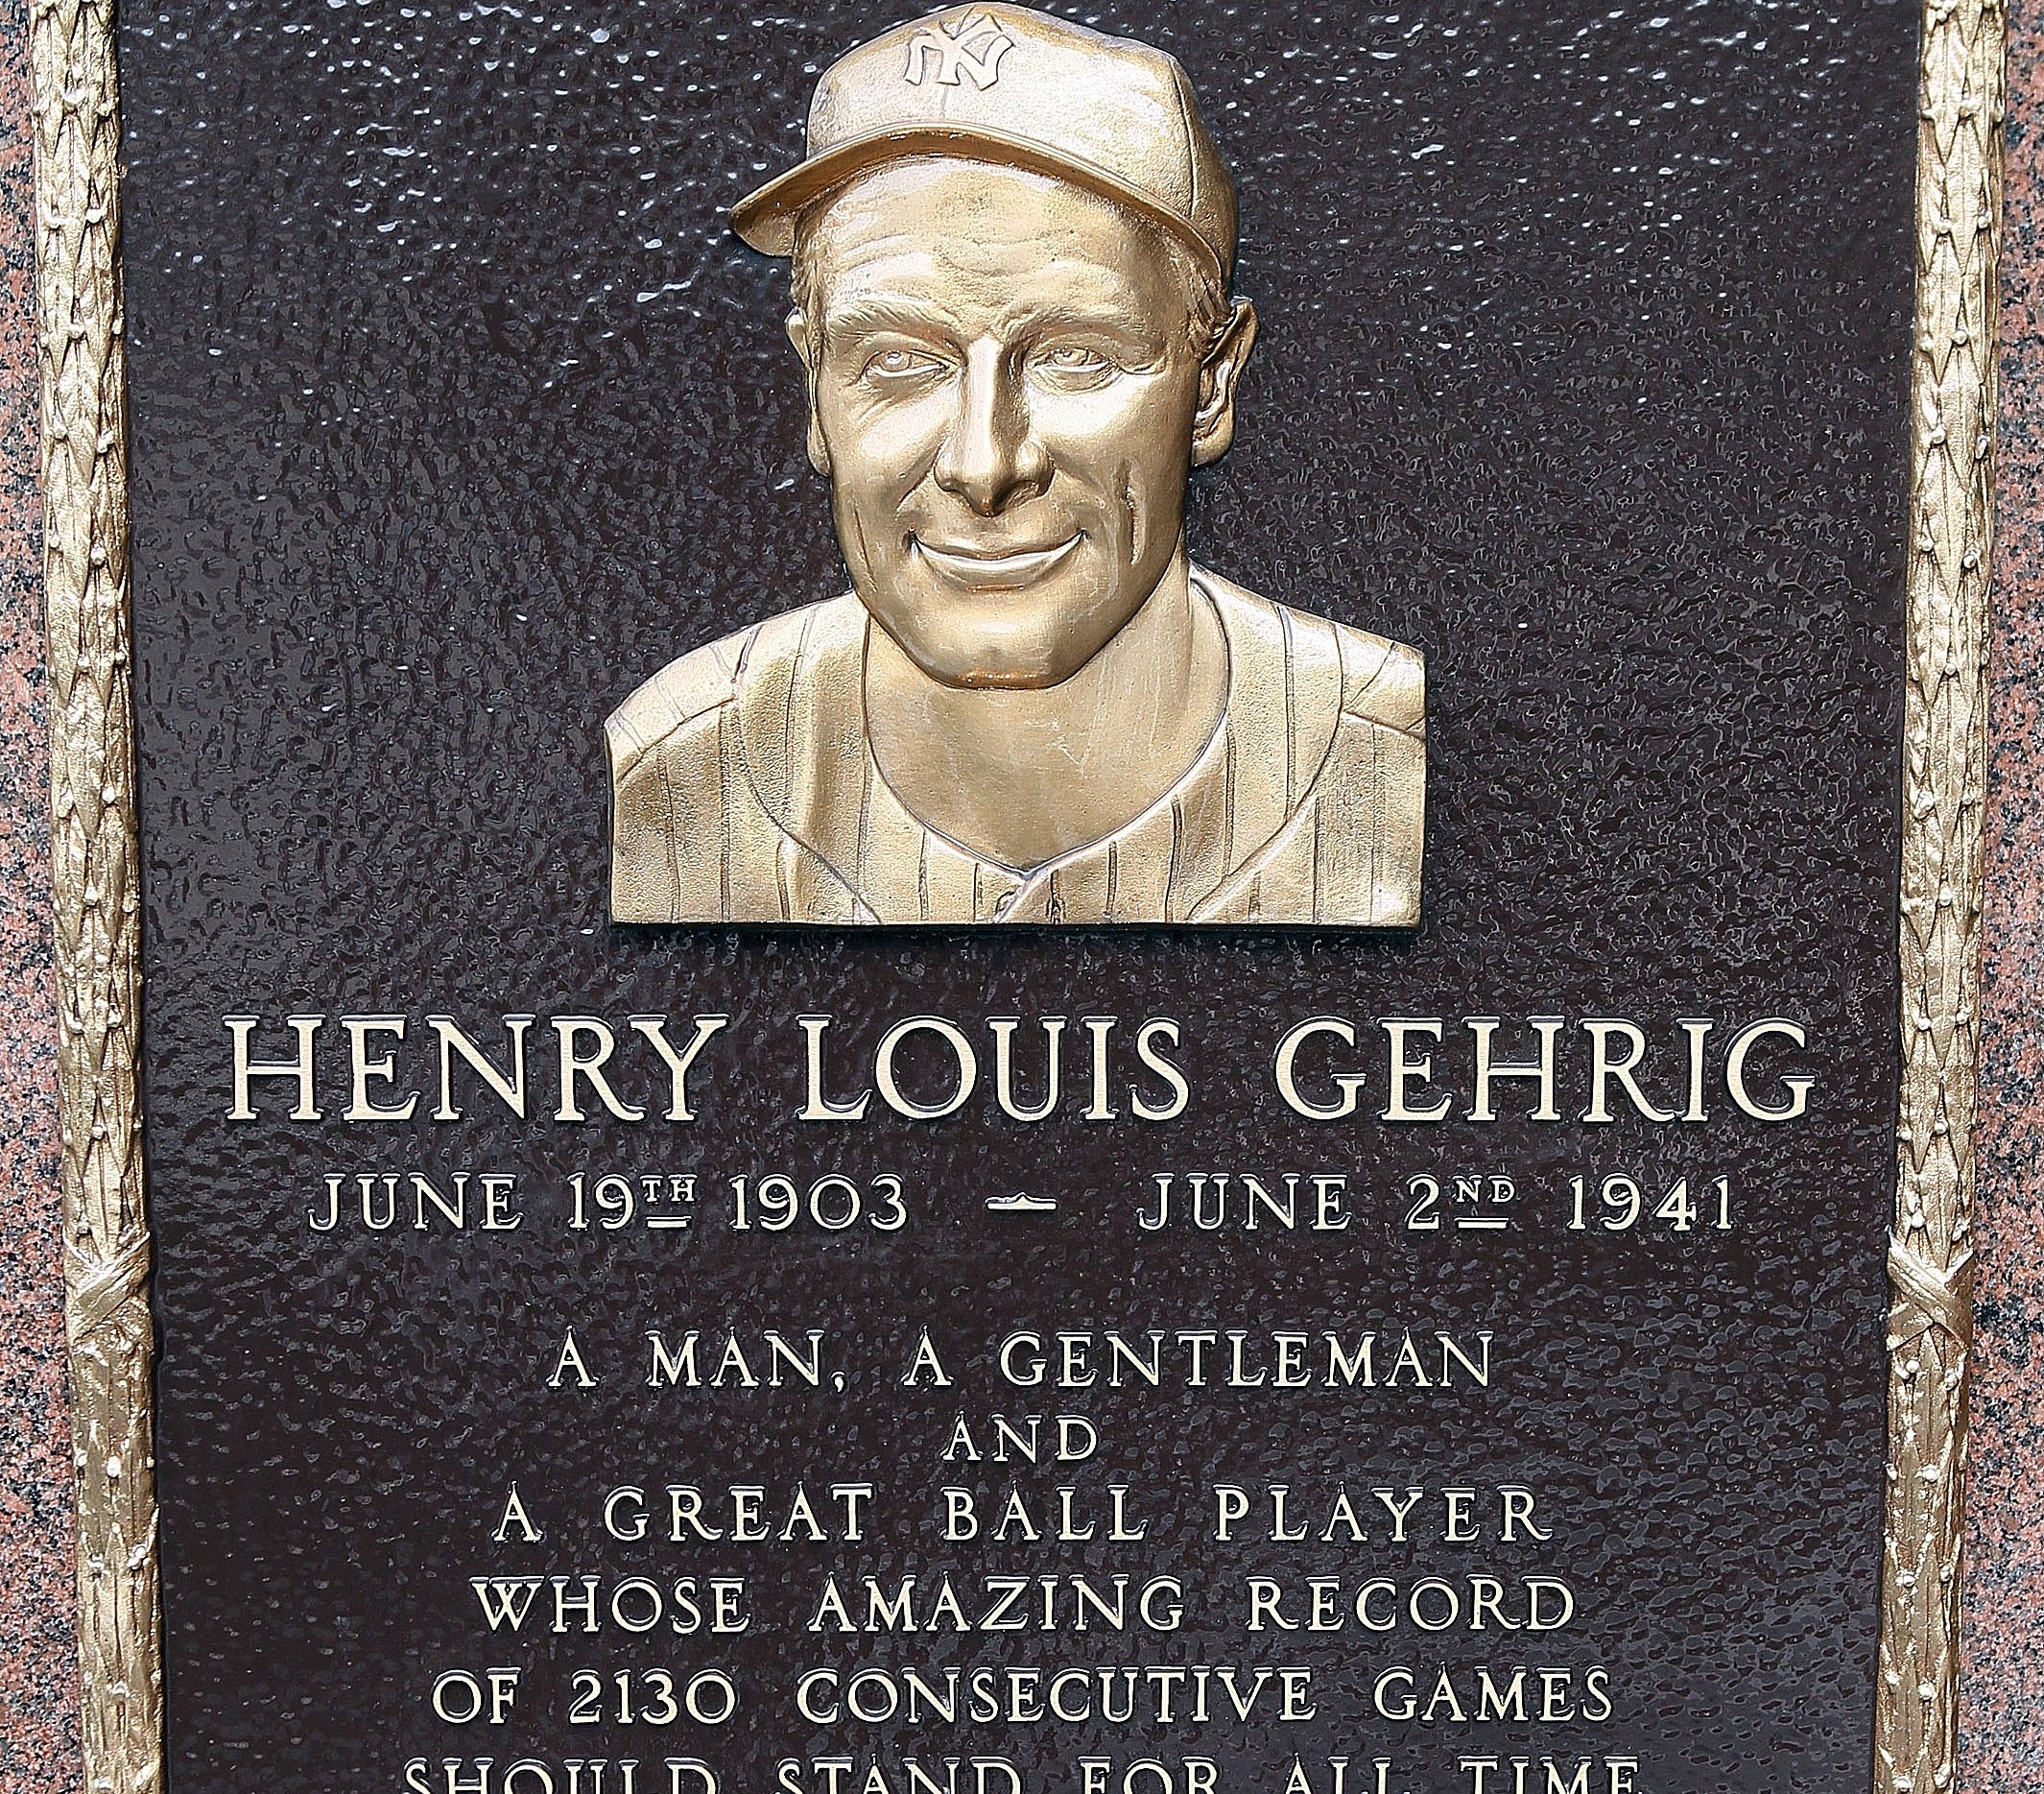 MLB: 75th anniversary of Lou Gehrig's speech 